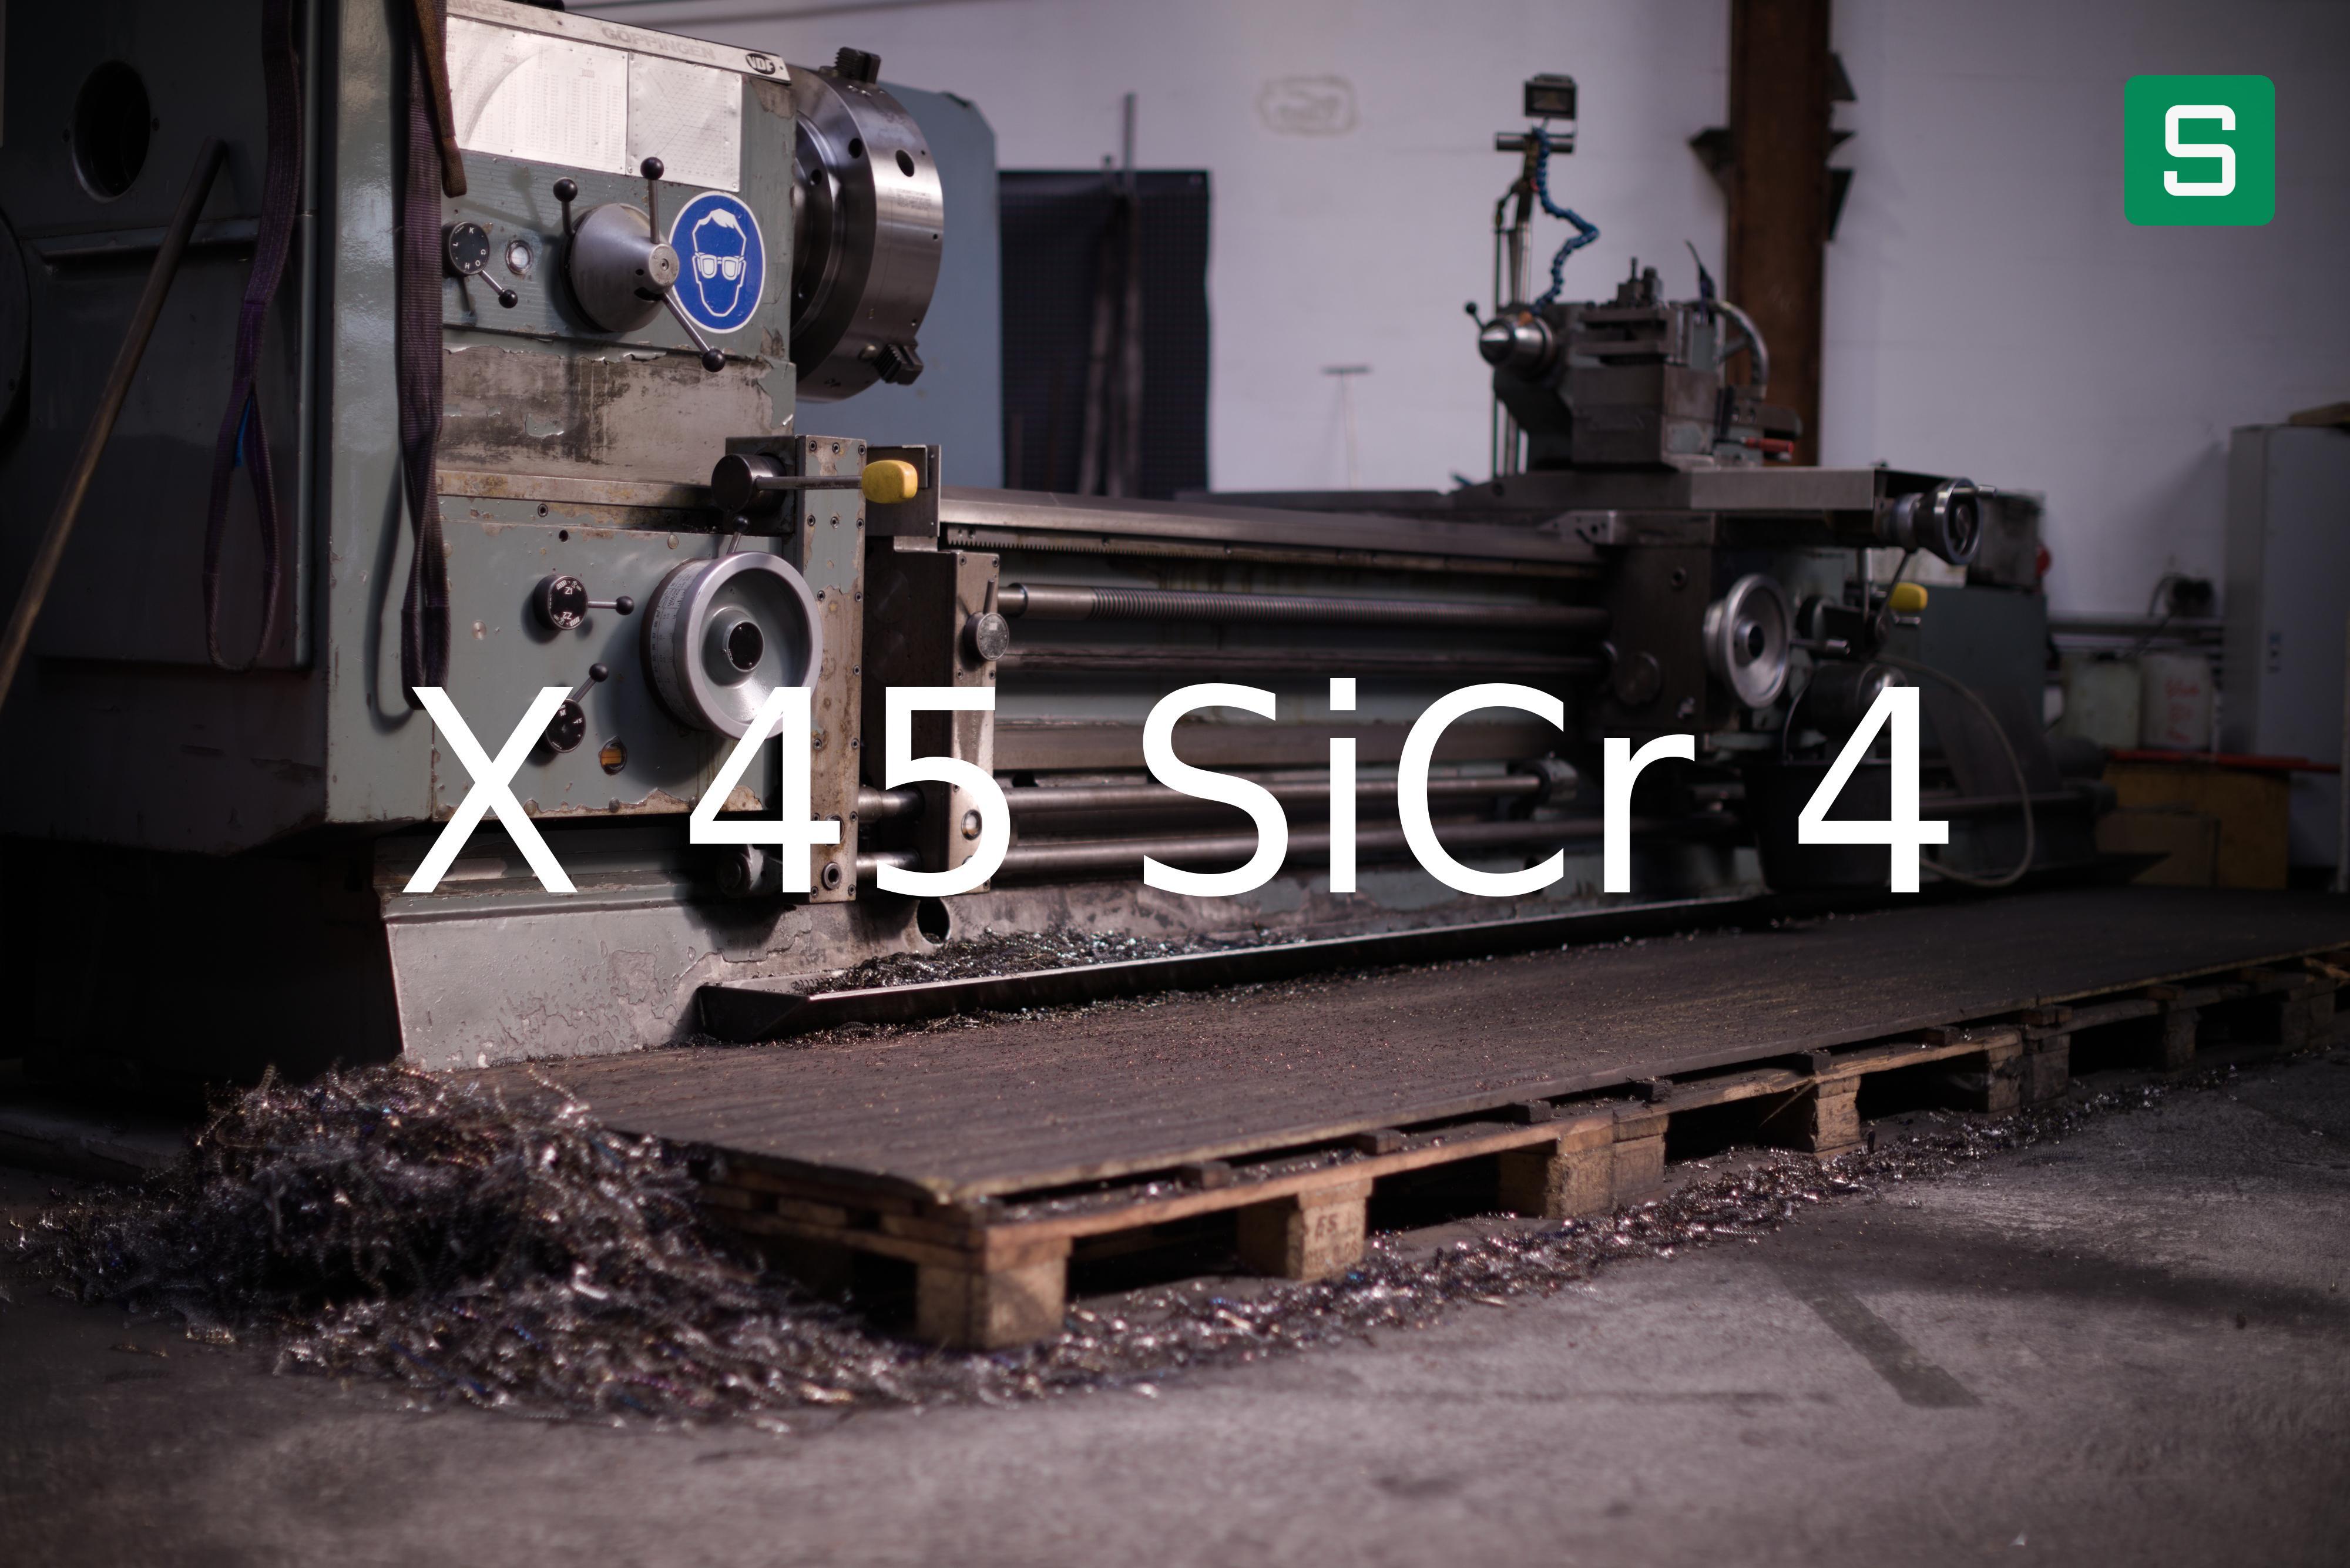 Steel Material: X 45 SiCr 4